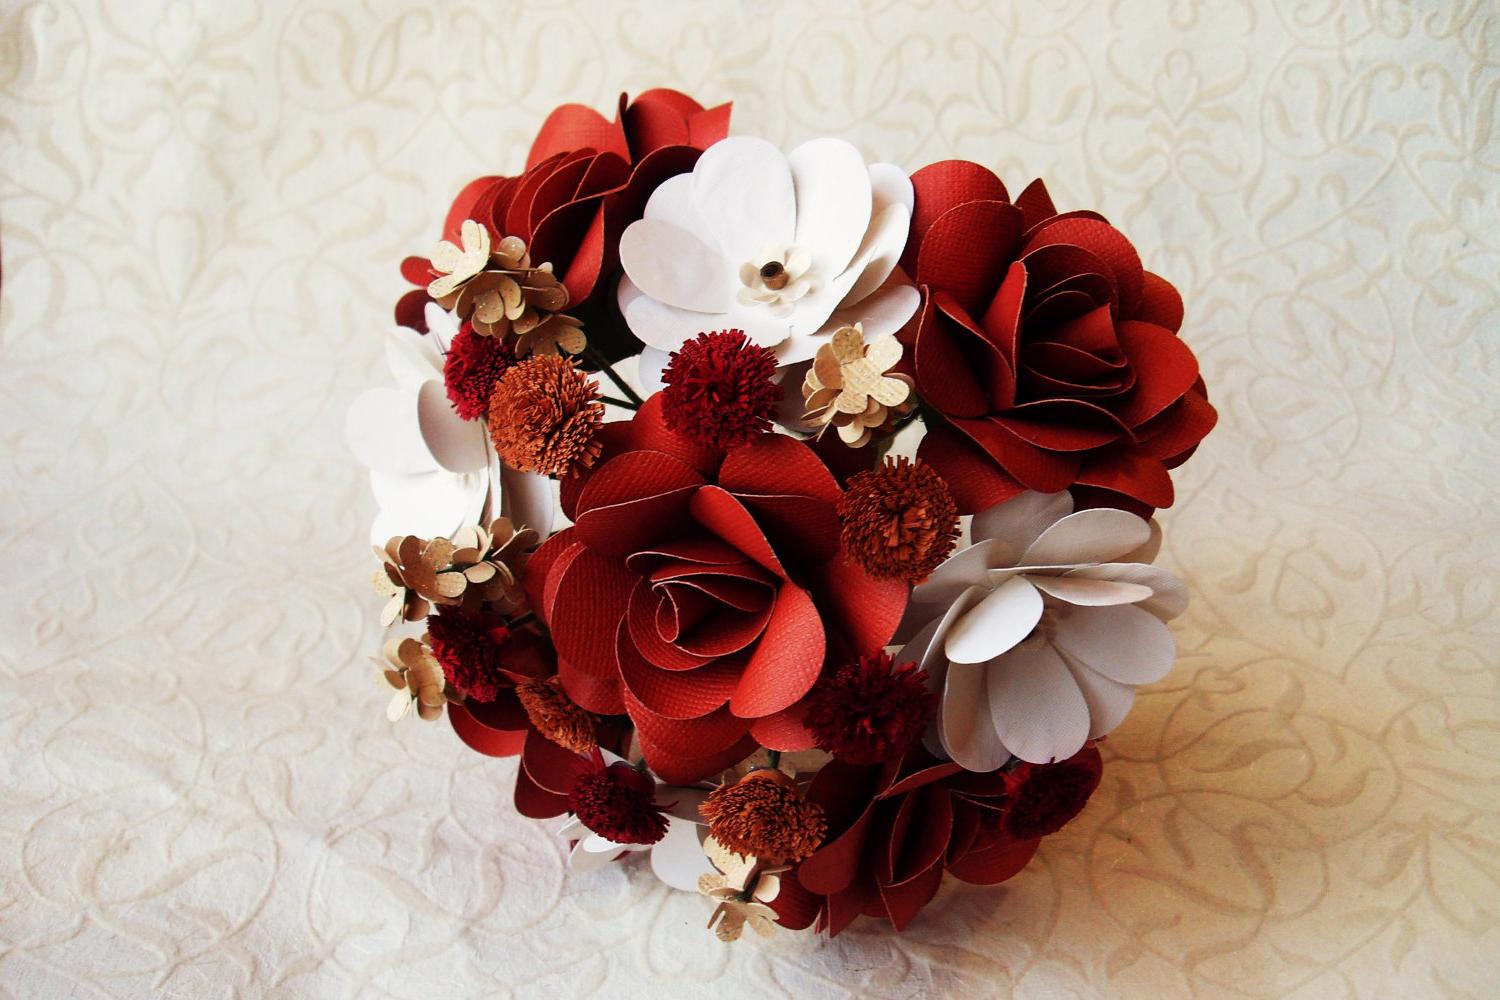 Autumn Bouquet - Bride, wedding, centerpiece. From JumpingJones